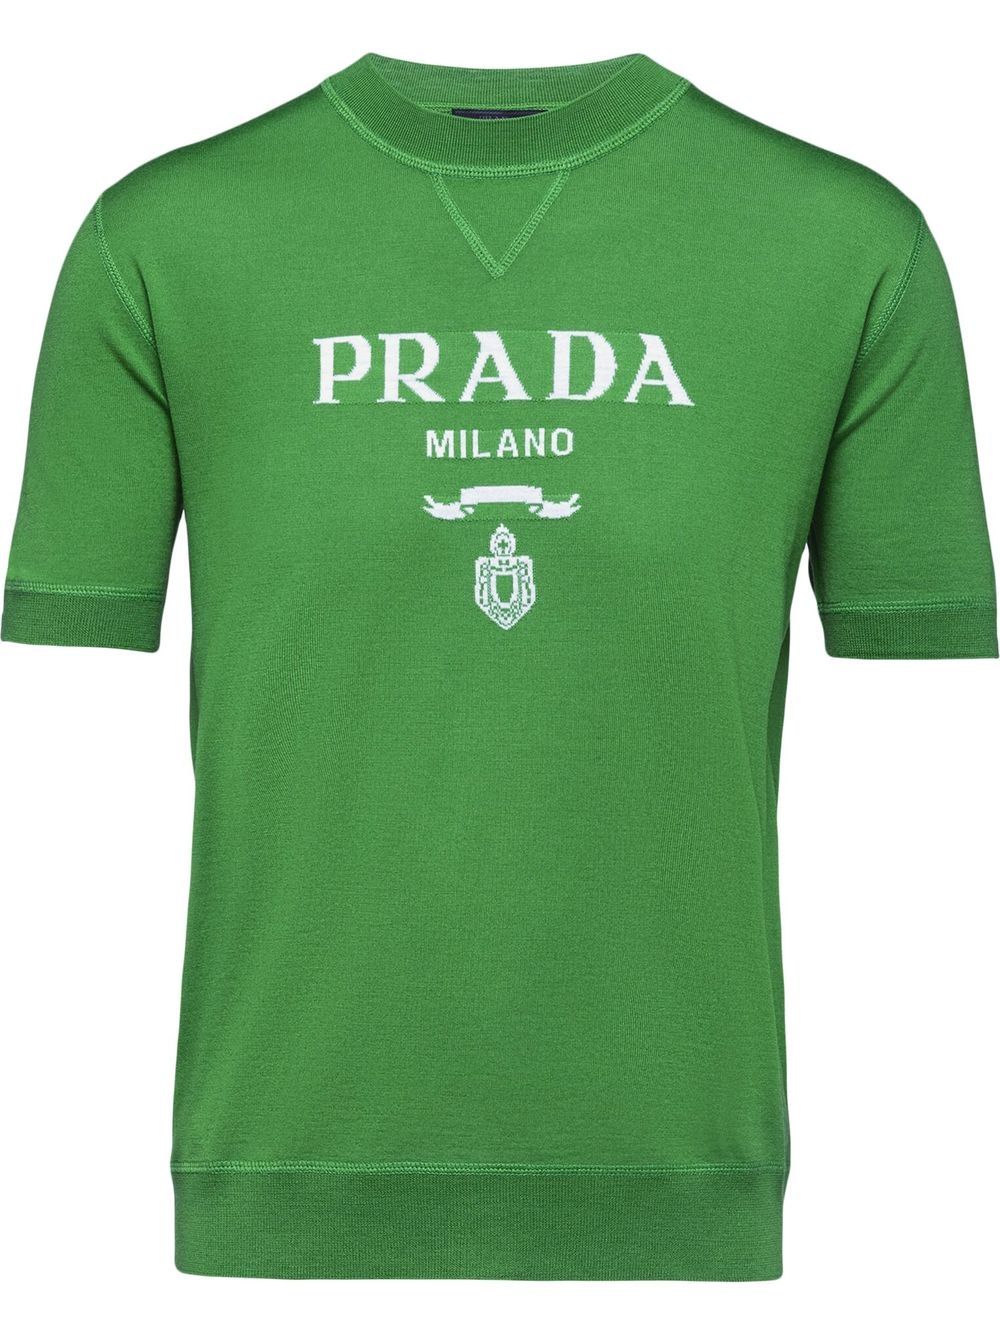 Prada Intarsia Logo Knitted Top In Green